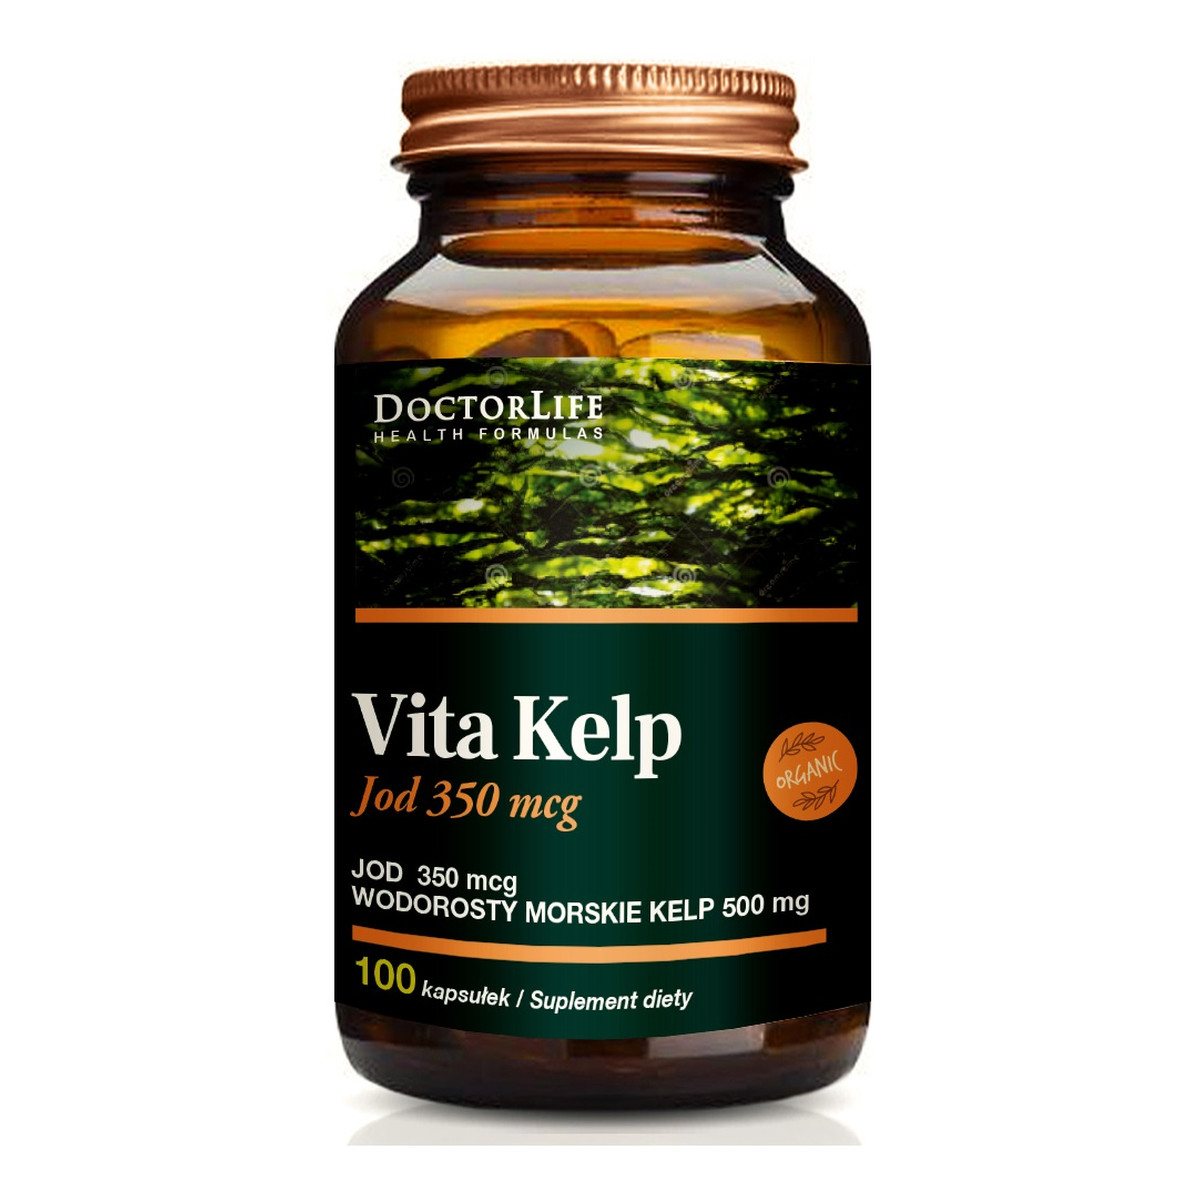 Doctor Life Vita kelp organic 500mg organiczny jod suplement diety 100 kapsułek